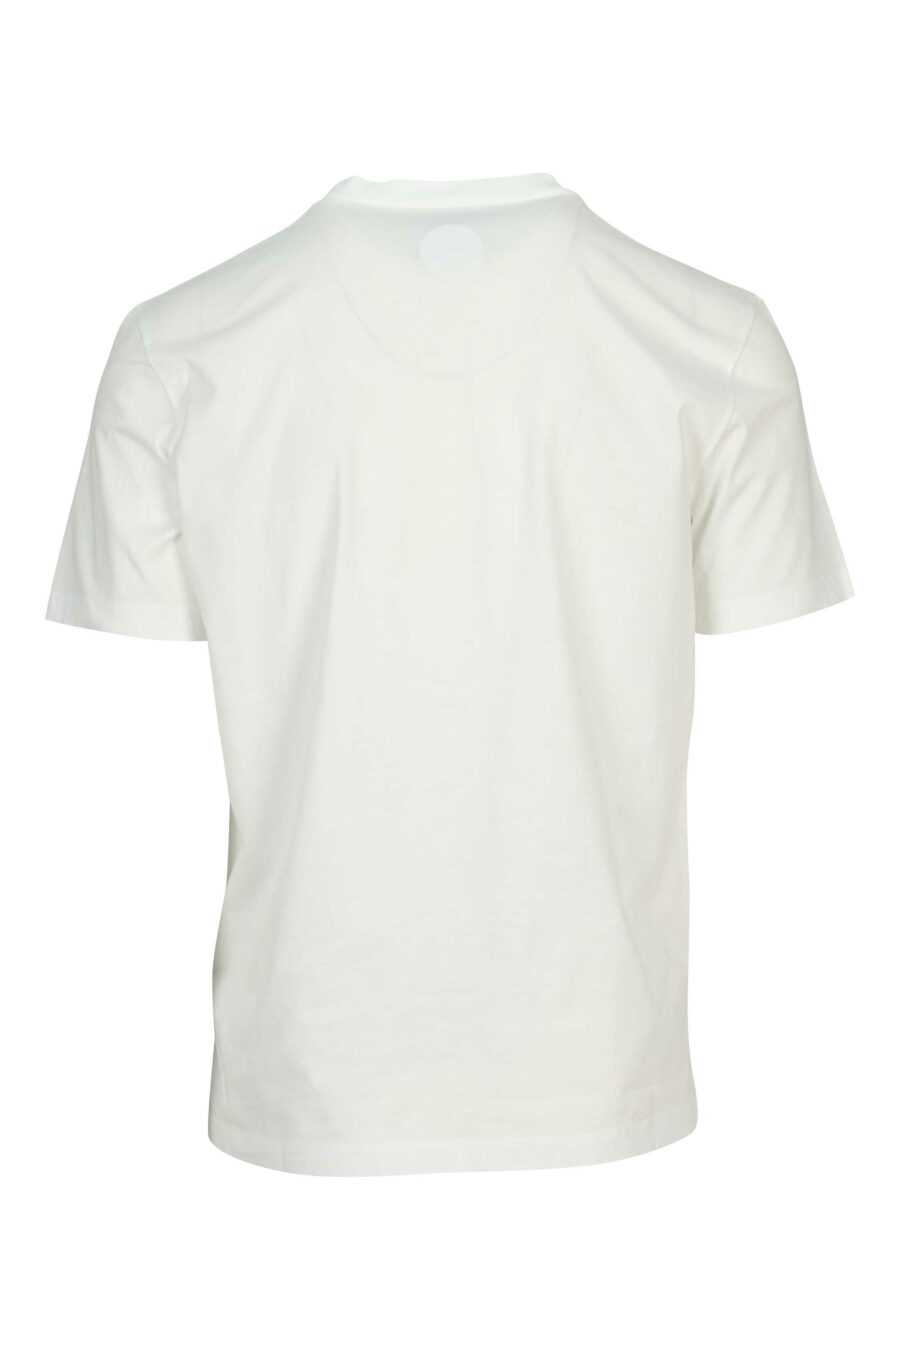 Camiseta blanca con maxilogo "gym" desgastado - 8054148265977 1